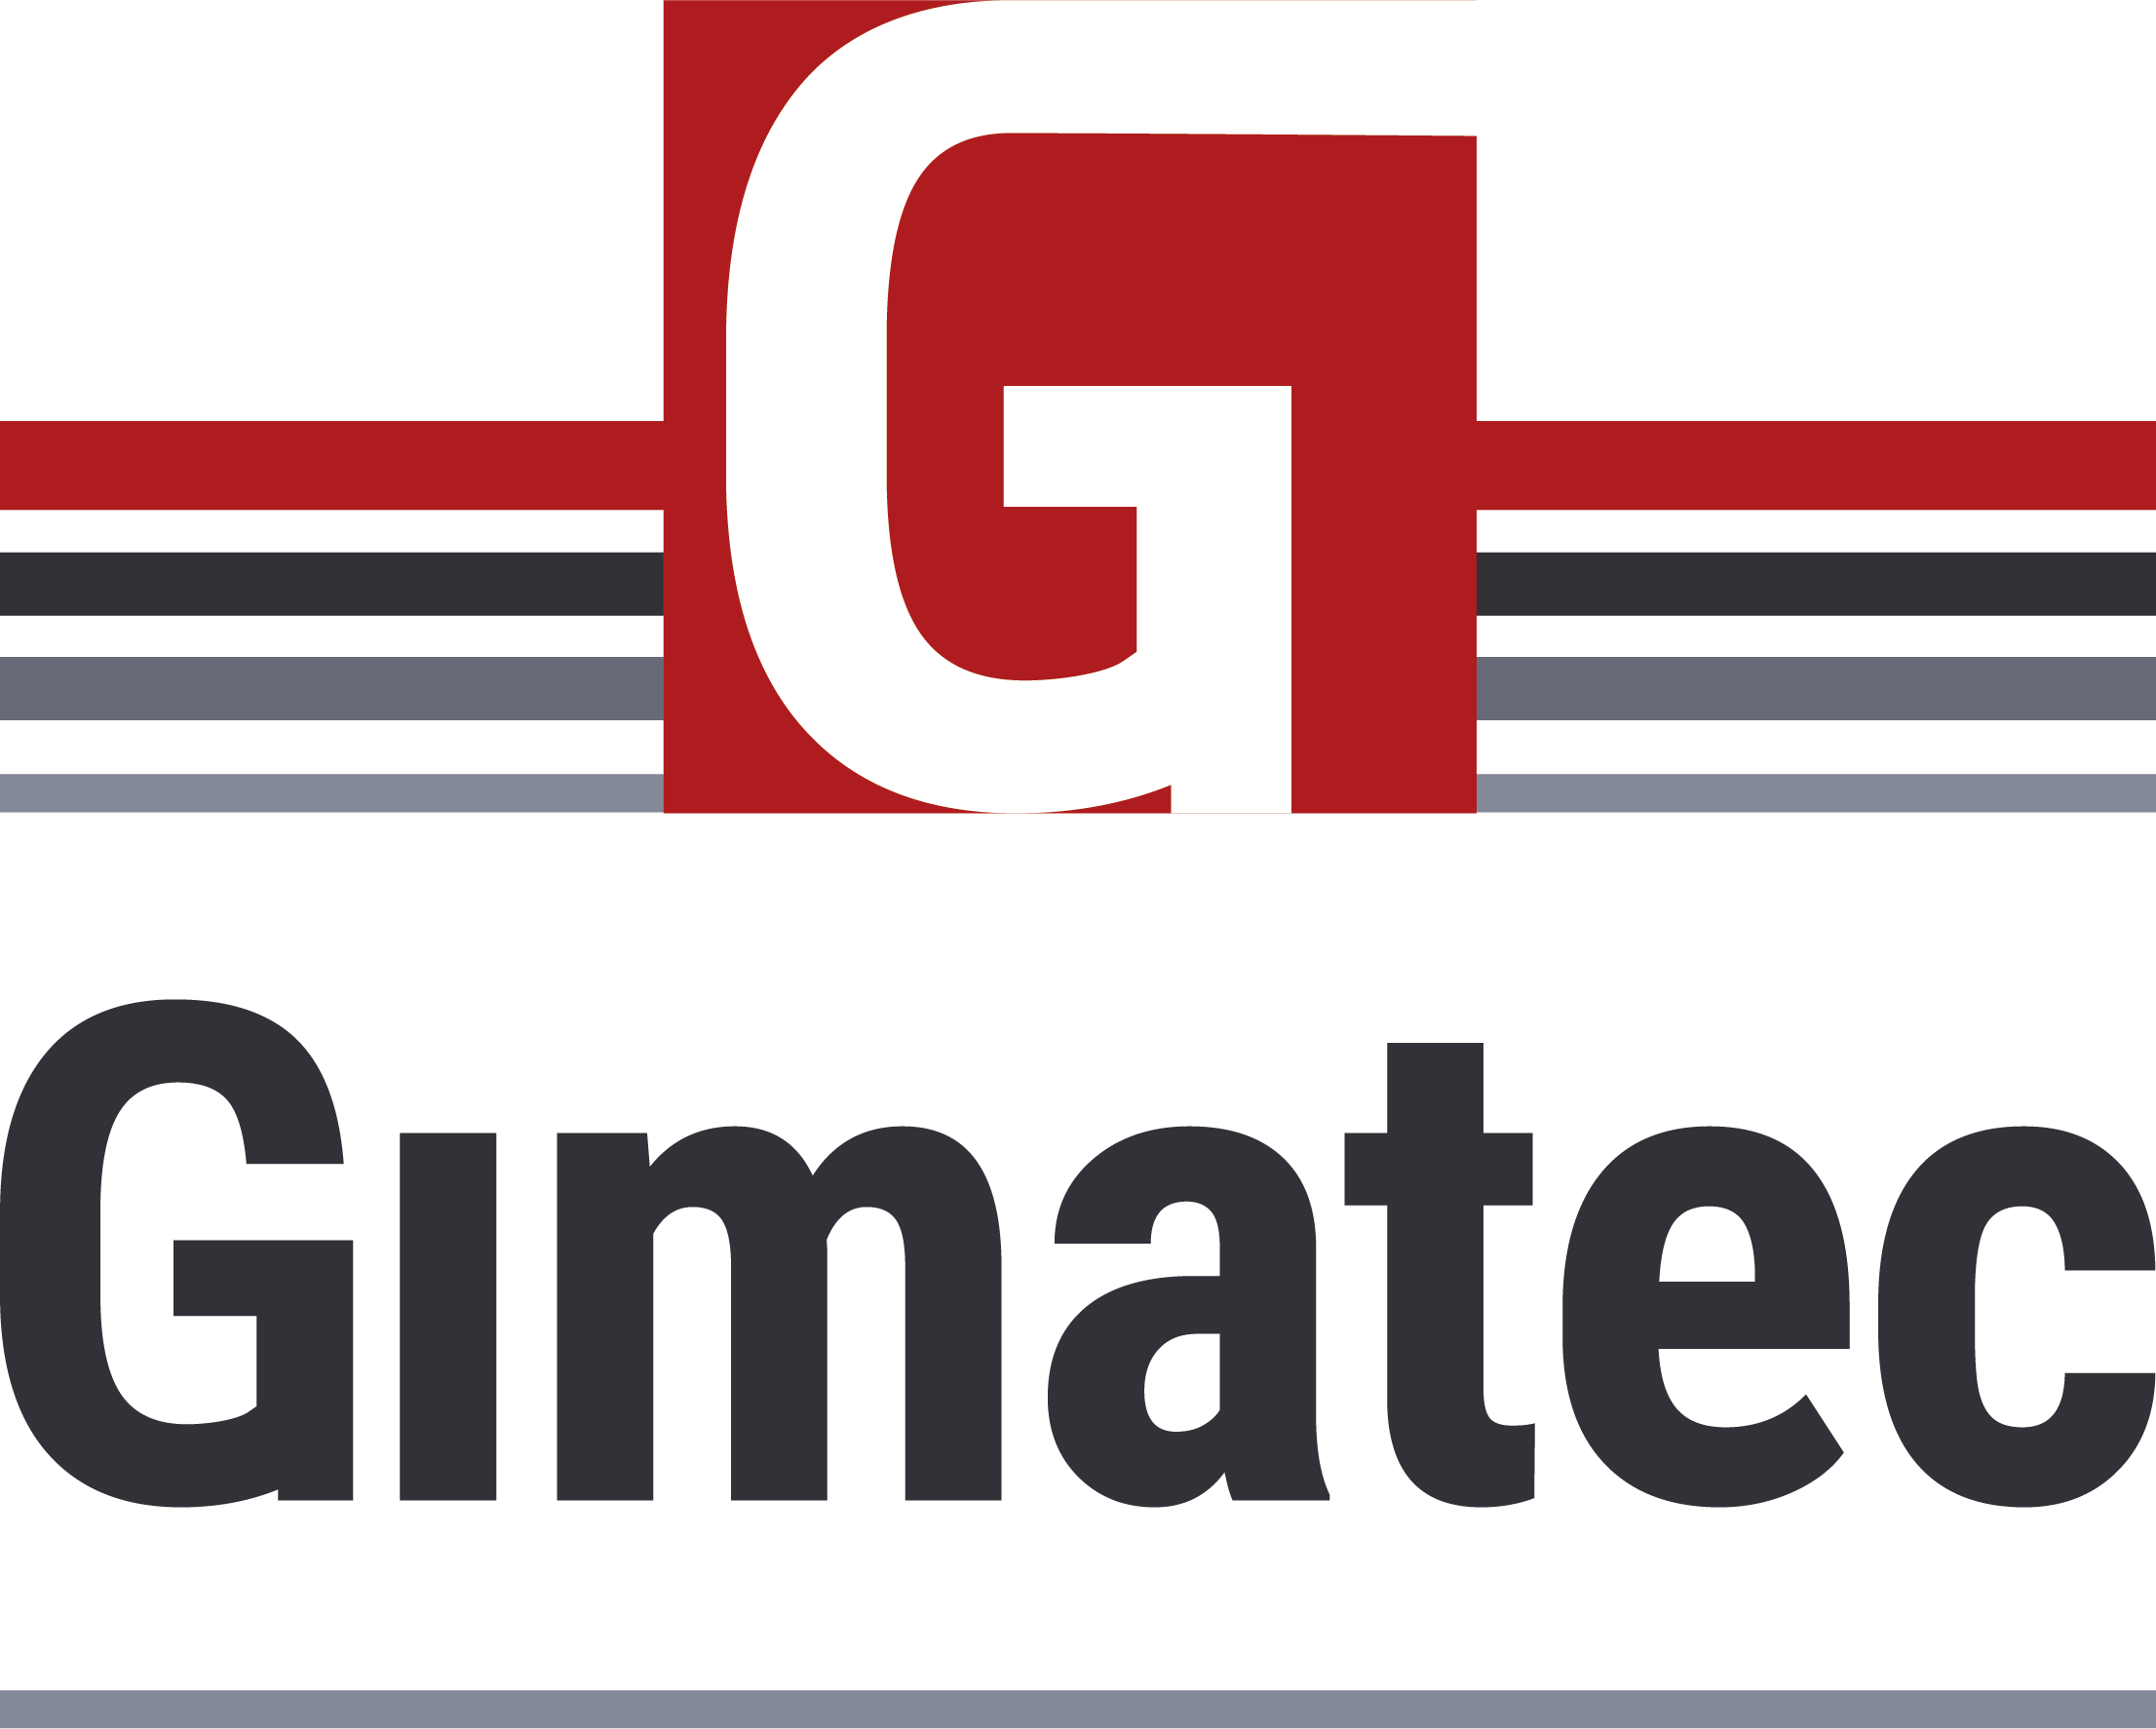 Gimatec